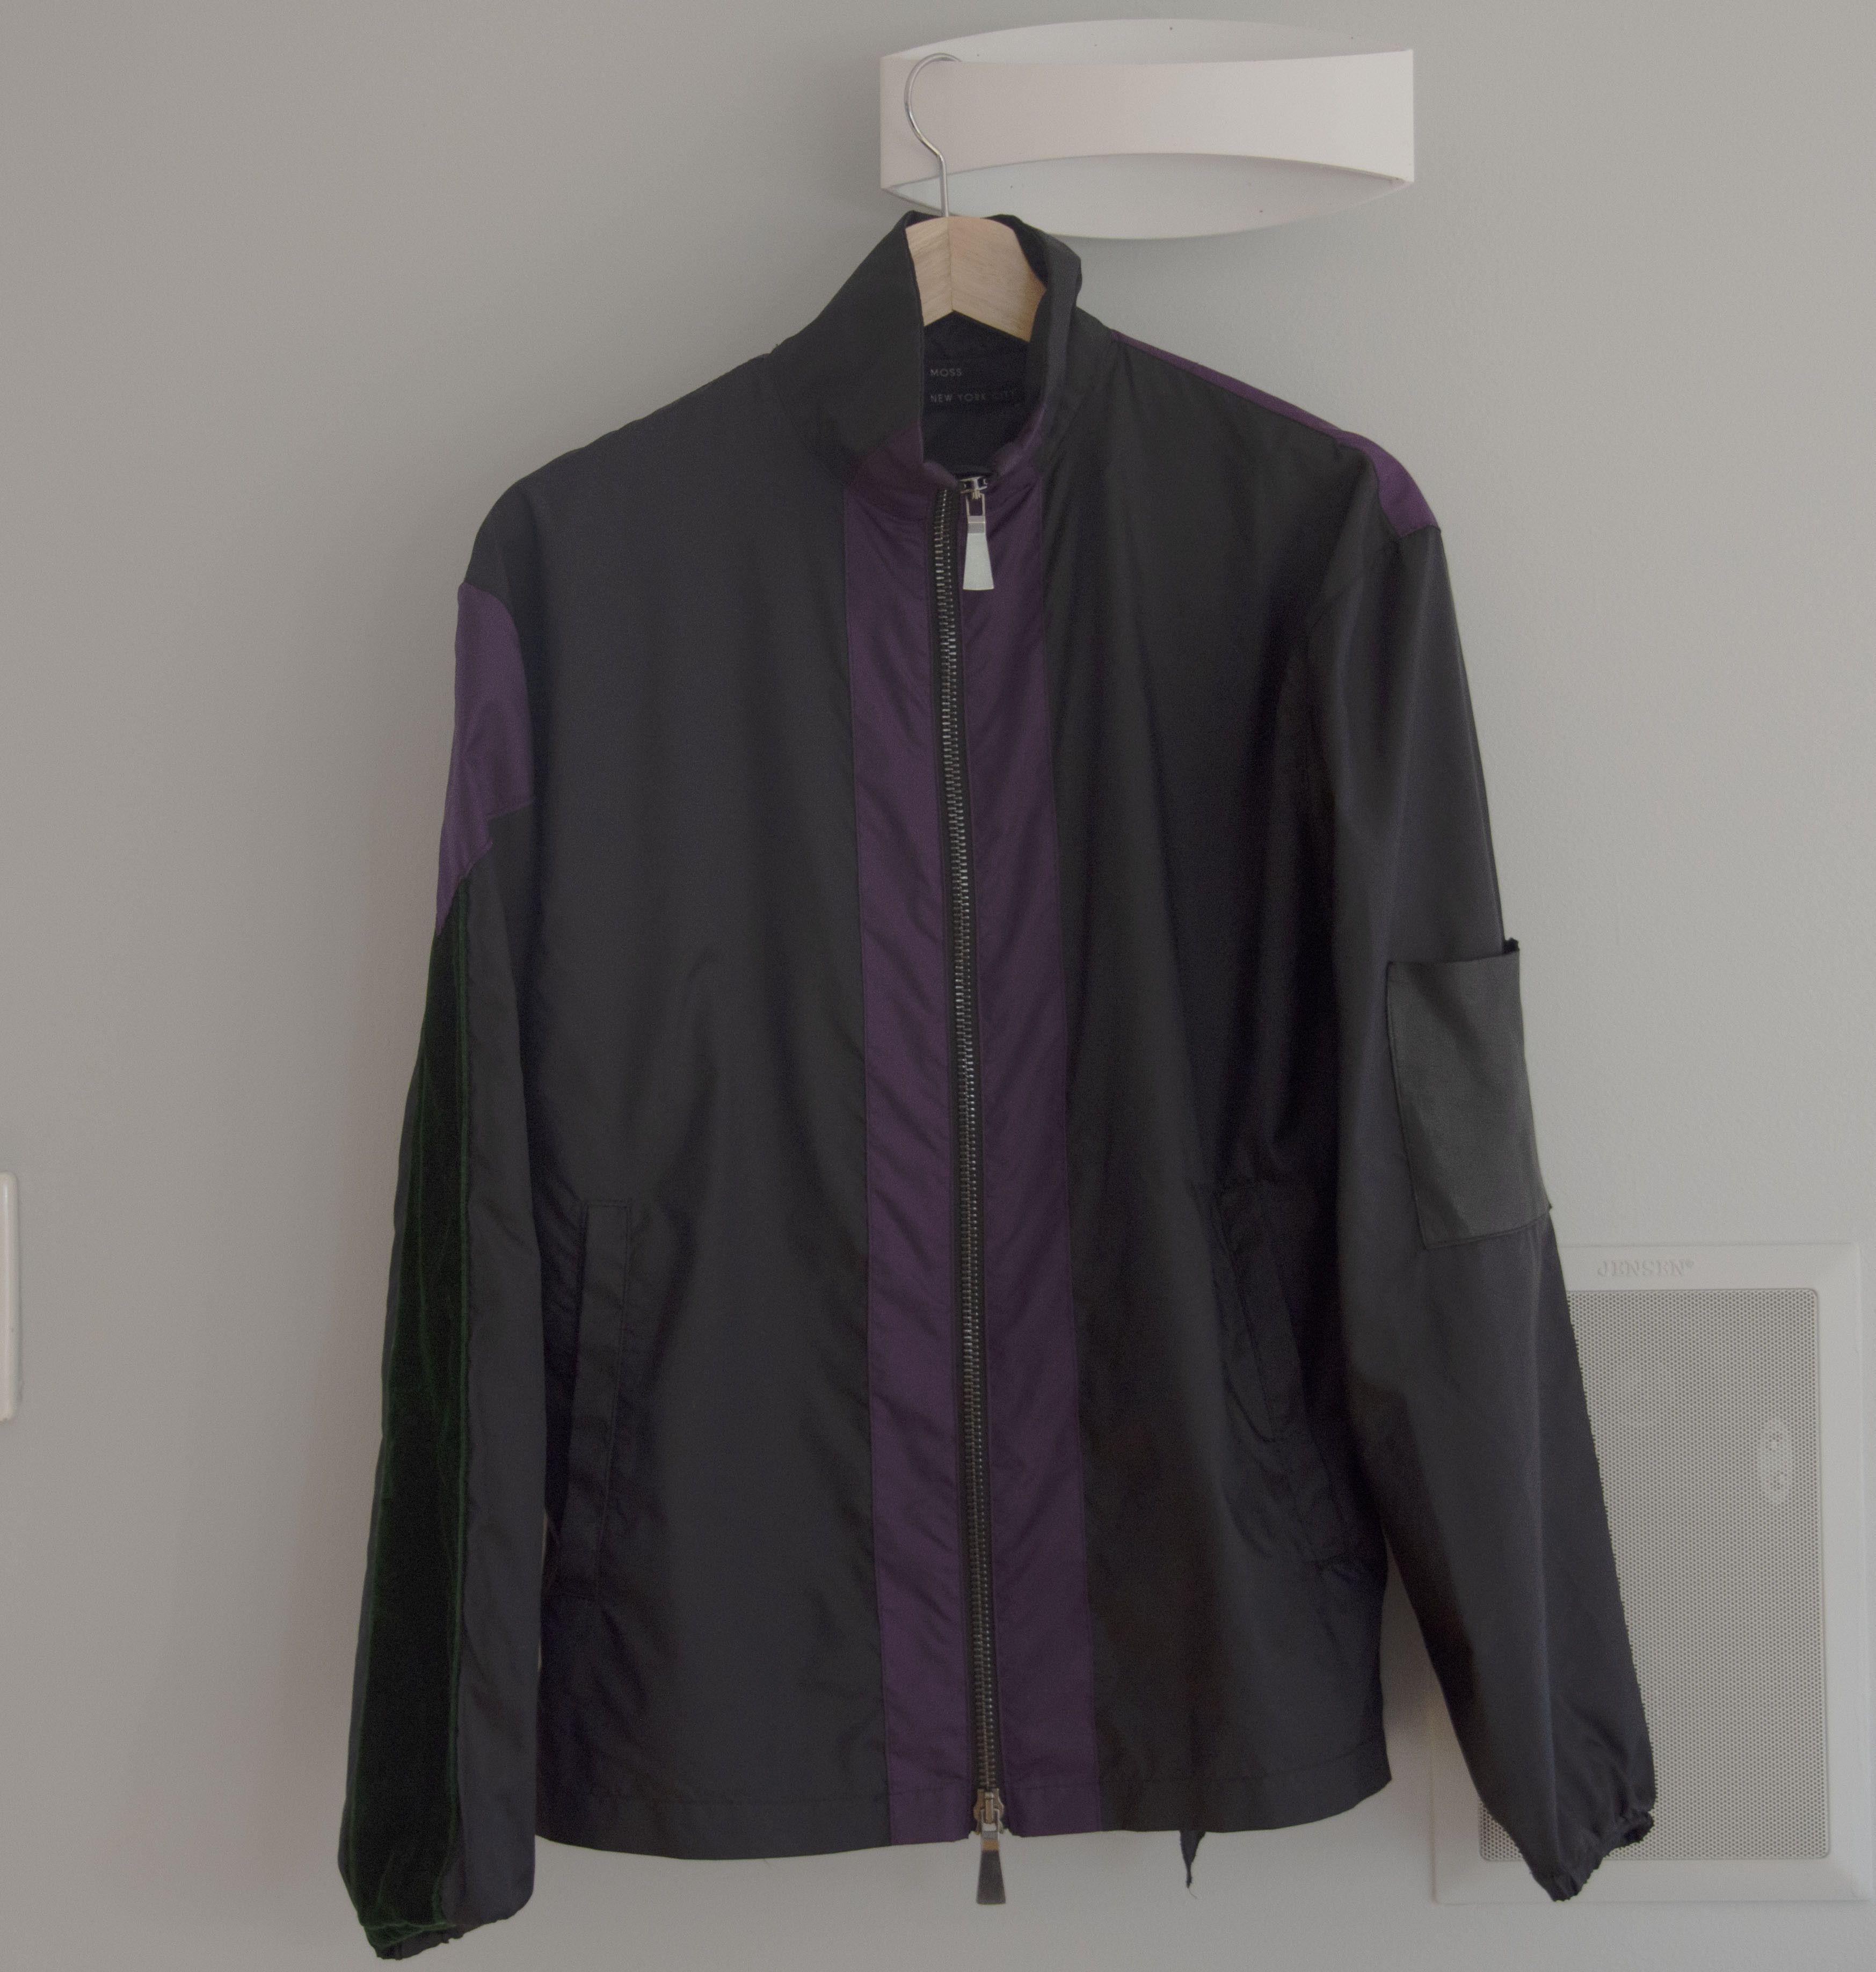 Pyer Moss Pyer Moss Black and Purple Track Jacket/ Tracksuit Jacket Size US XS / EU 42 / 0 - 1 Preview